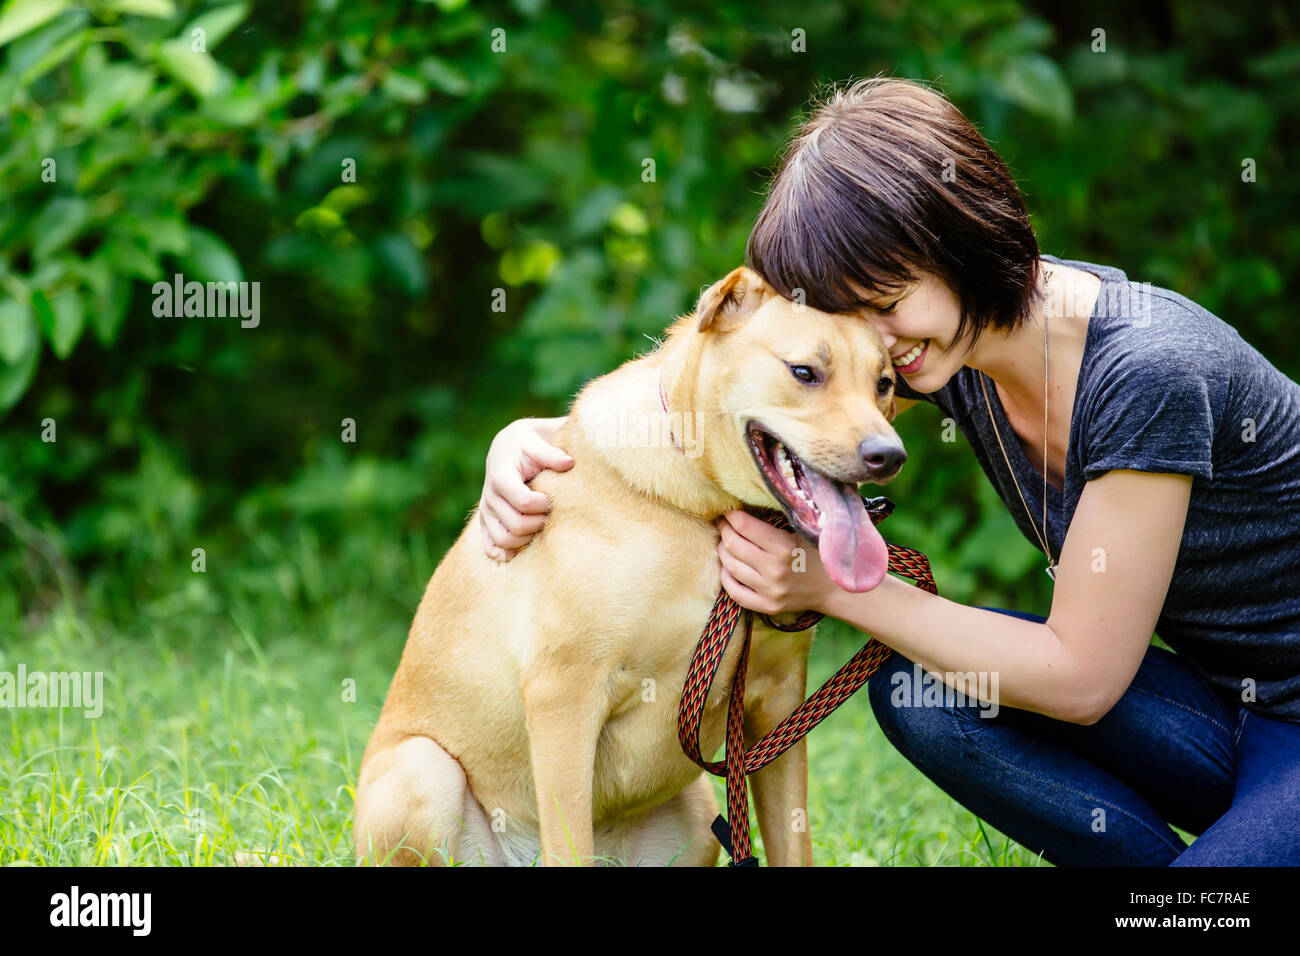 Caucasian woman petting dog in field Stock Photo